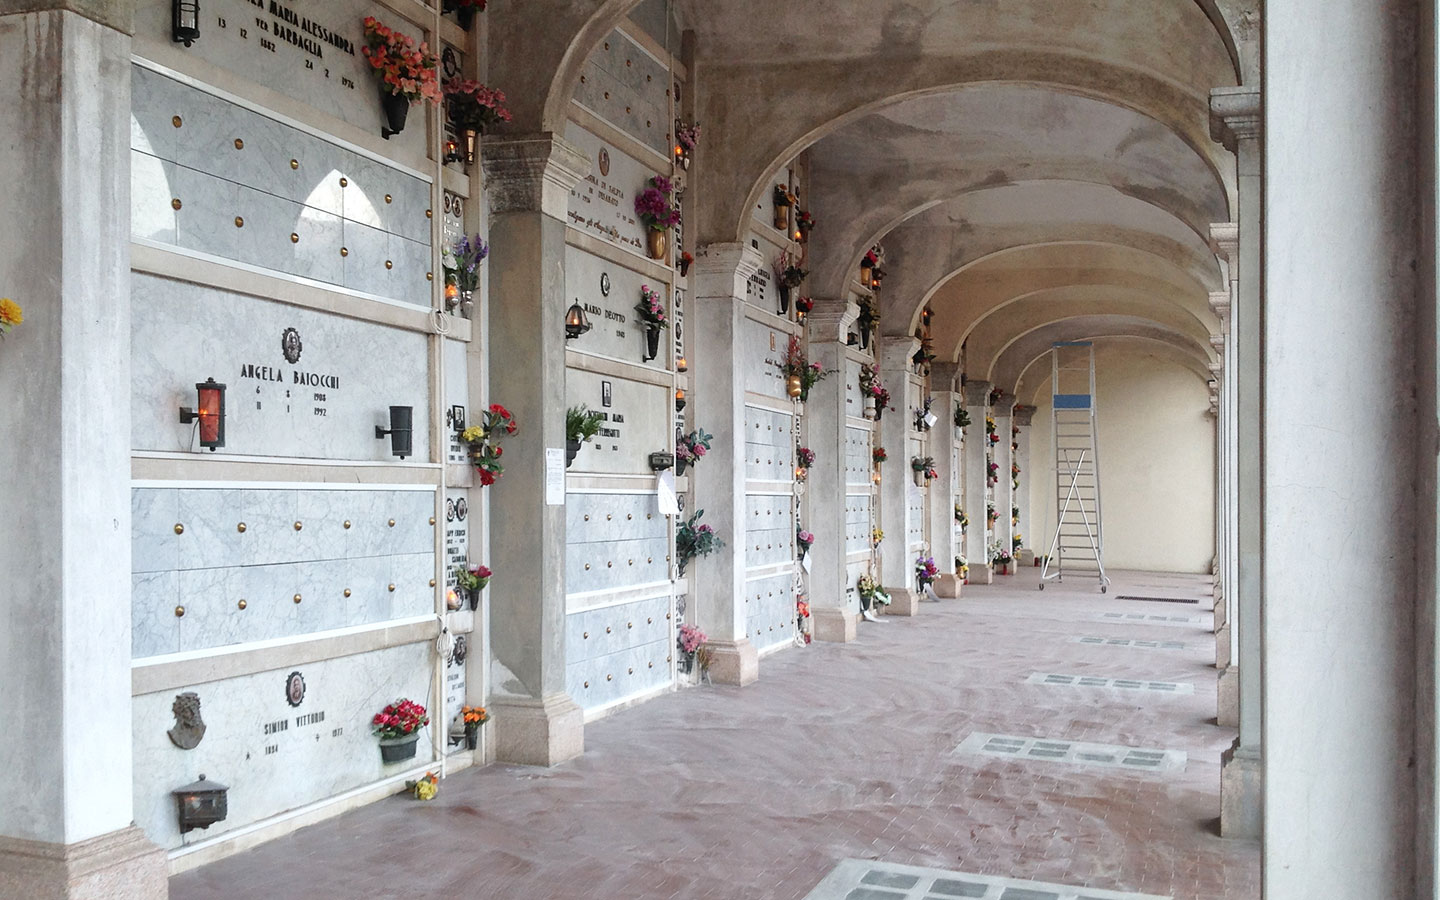 Edilizia cimiteriale - Loculi, cinerari e ossari prefabbricati per ampliamenti cimiteriali